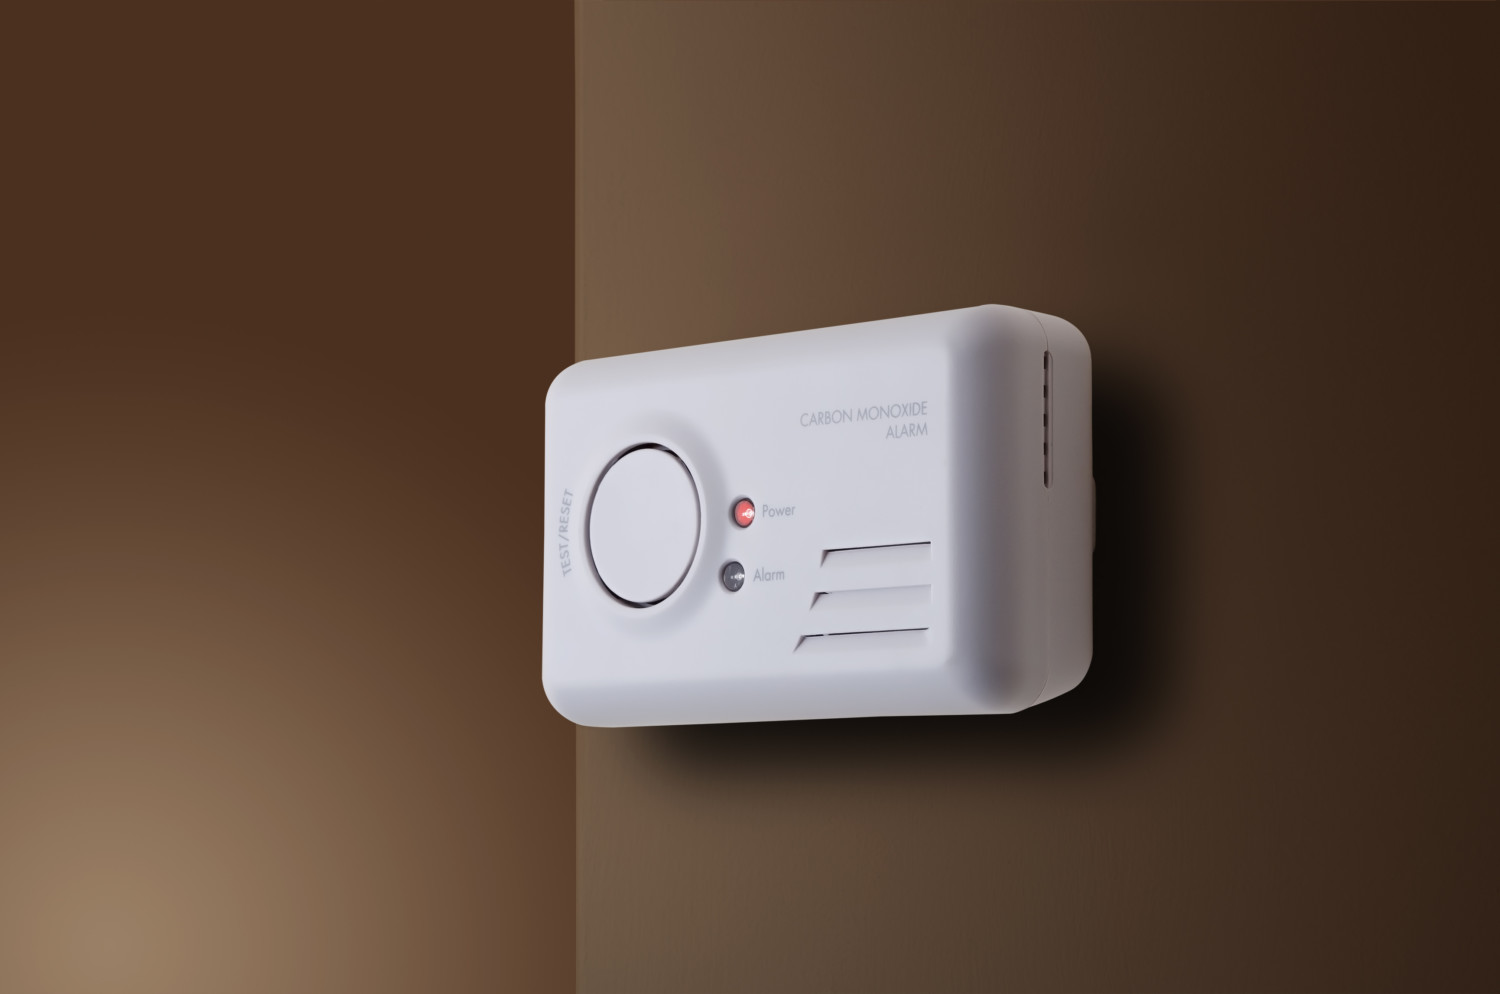 Carbon Monoxide alarm mounted to interior wall